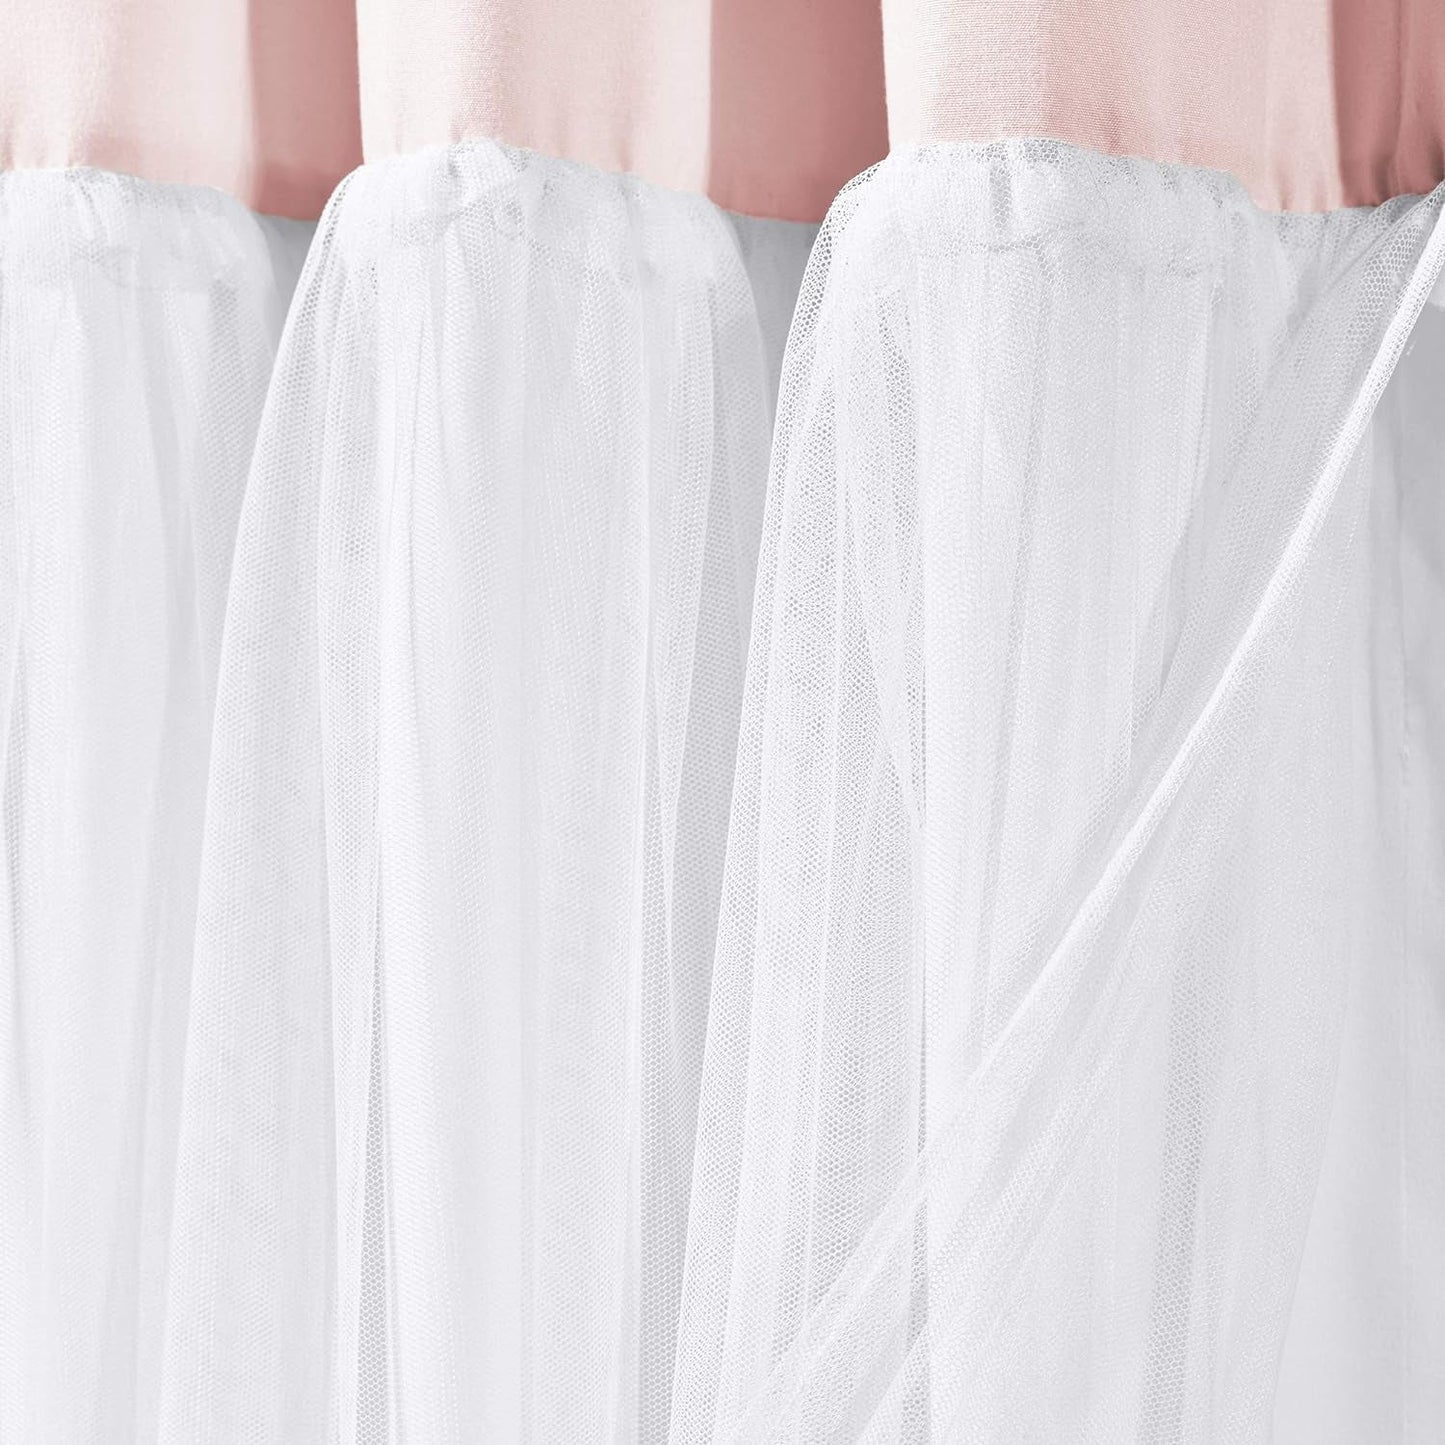 Lush Decor Tulle Skirt Colorblock Shower Curtain, 72" X 72", Blush & White